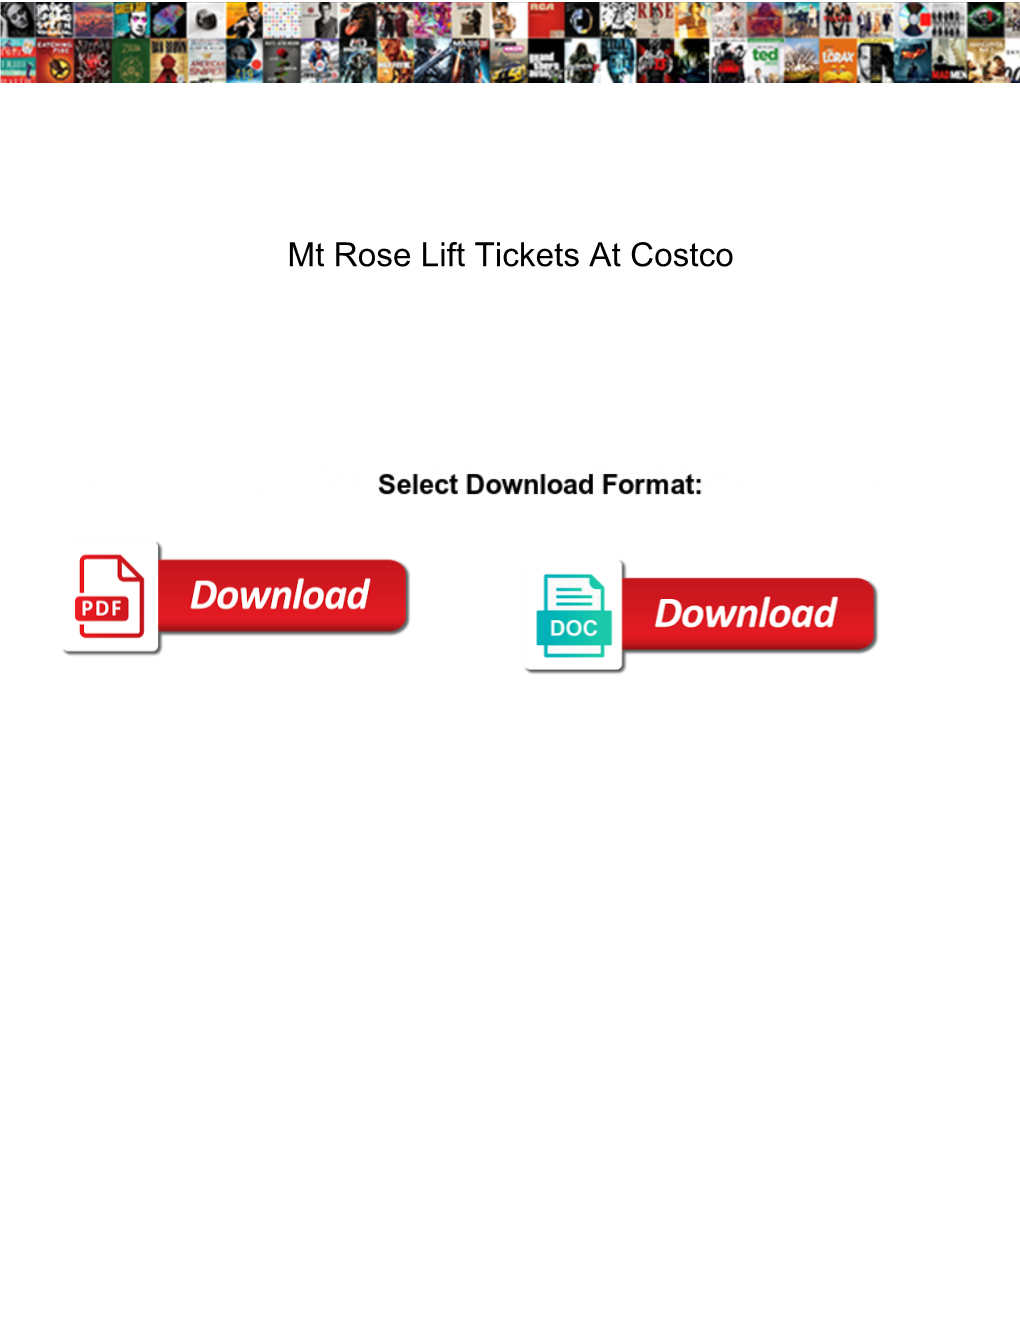 Mt Rose Lift Tickets at Costco